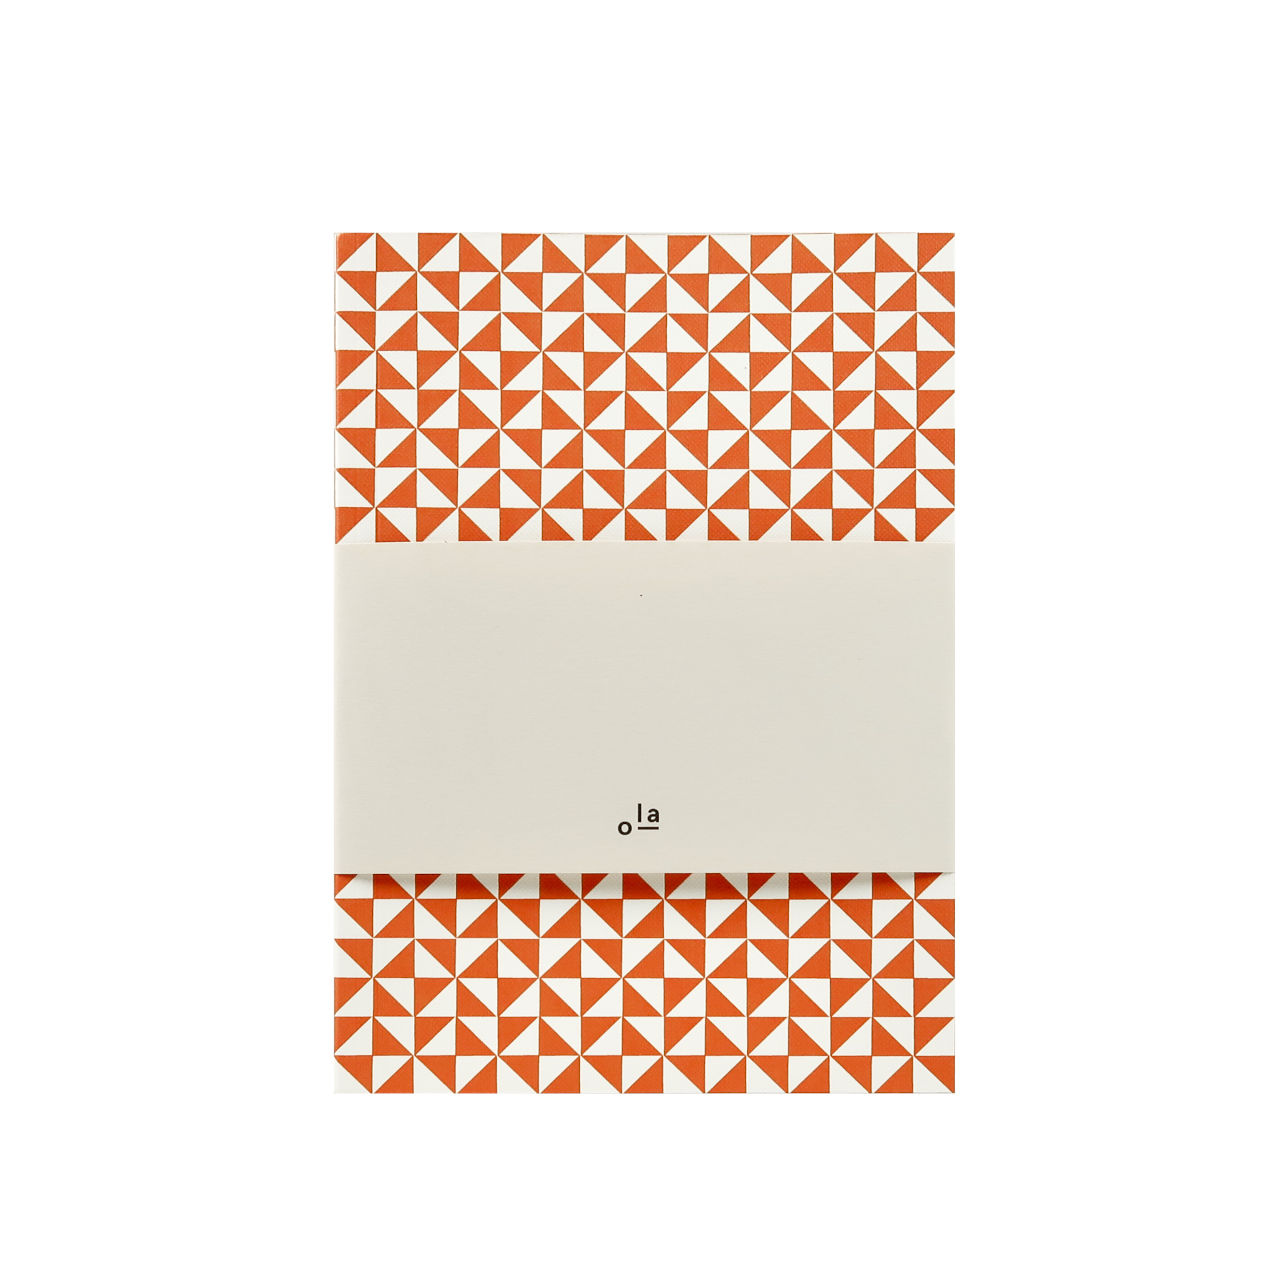 Ola Layflat Notebook - Kaffe Print in Brick Red